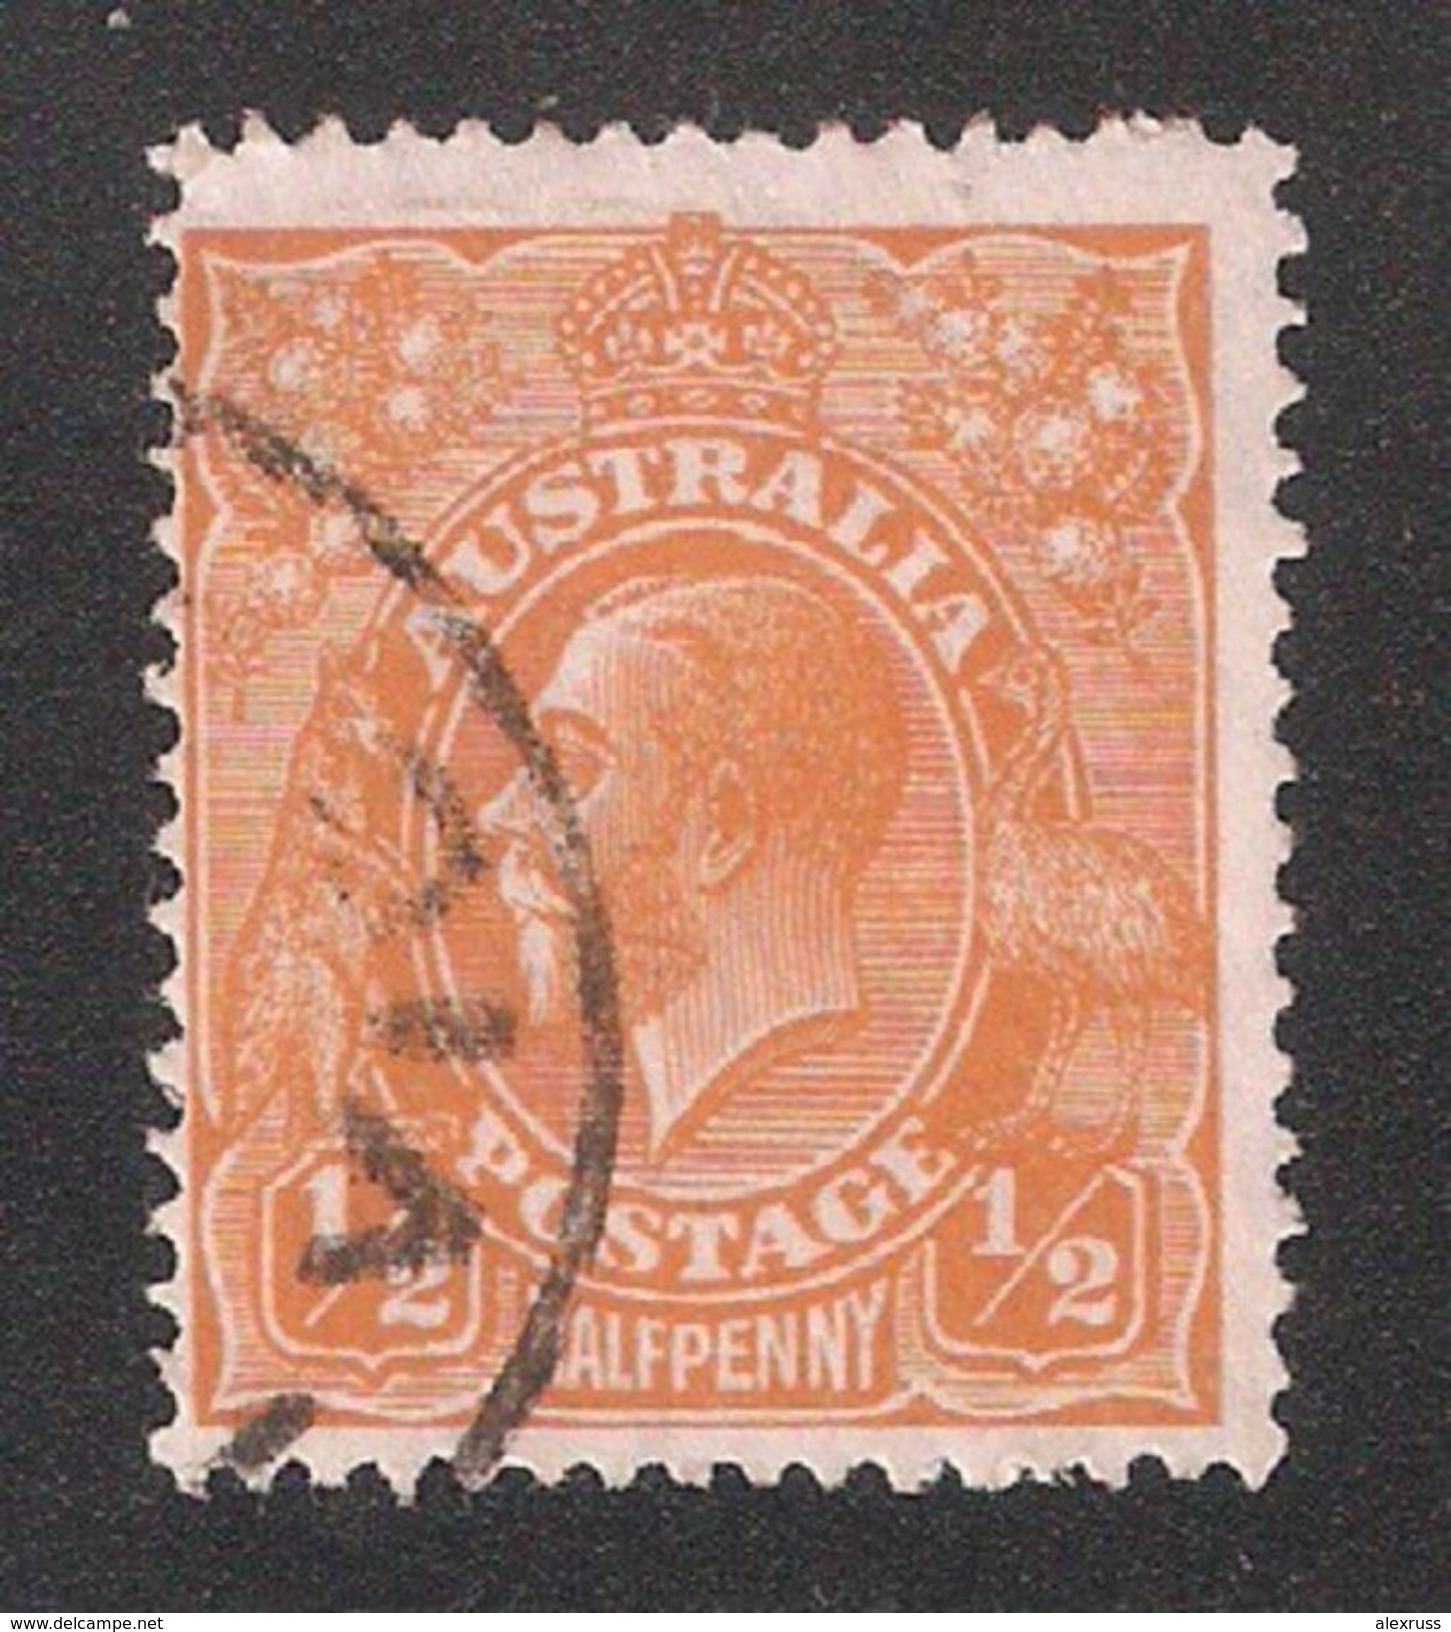 Australia 1926 KG V,1/2p,Wmk 203,Sc 66,Fine Used - Used Stamps